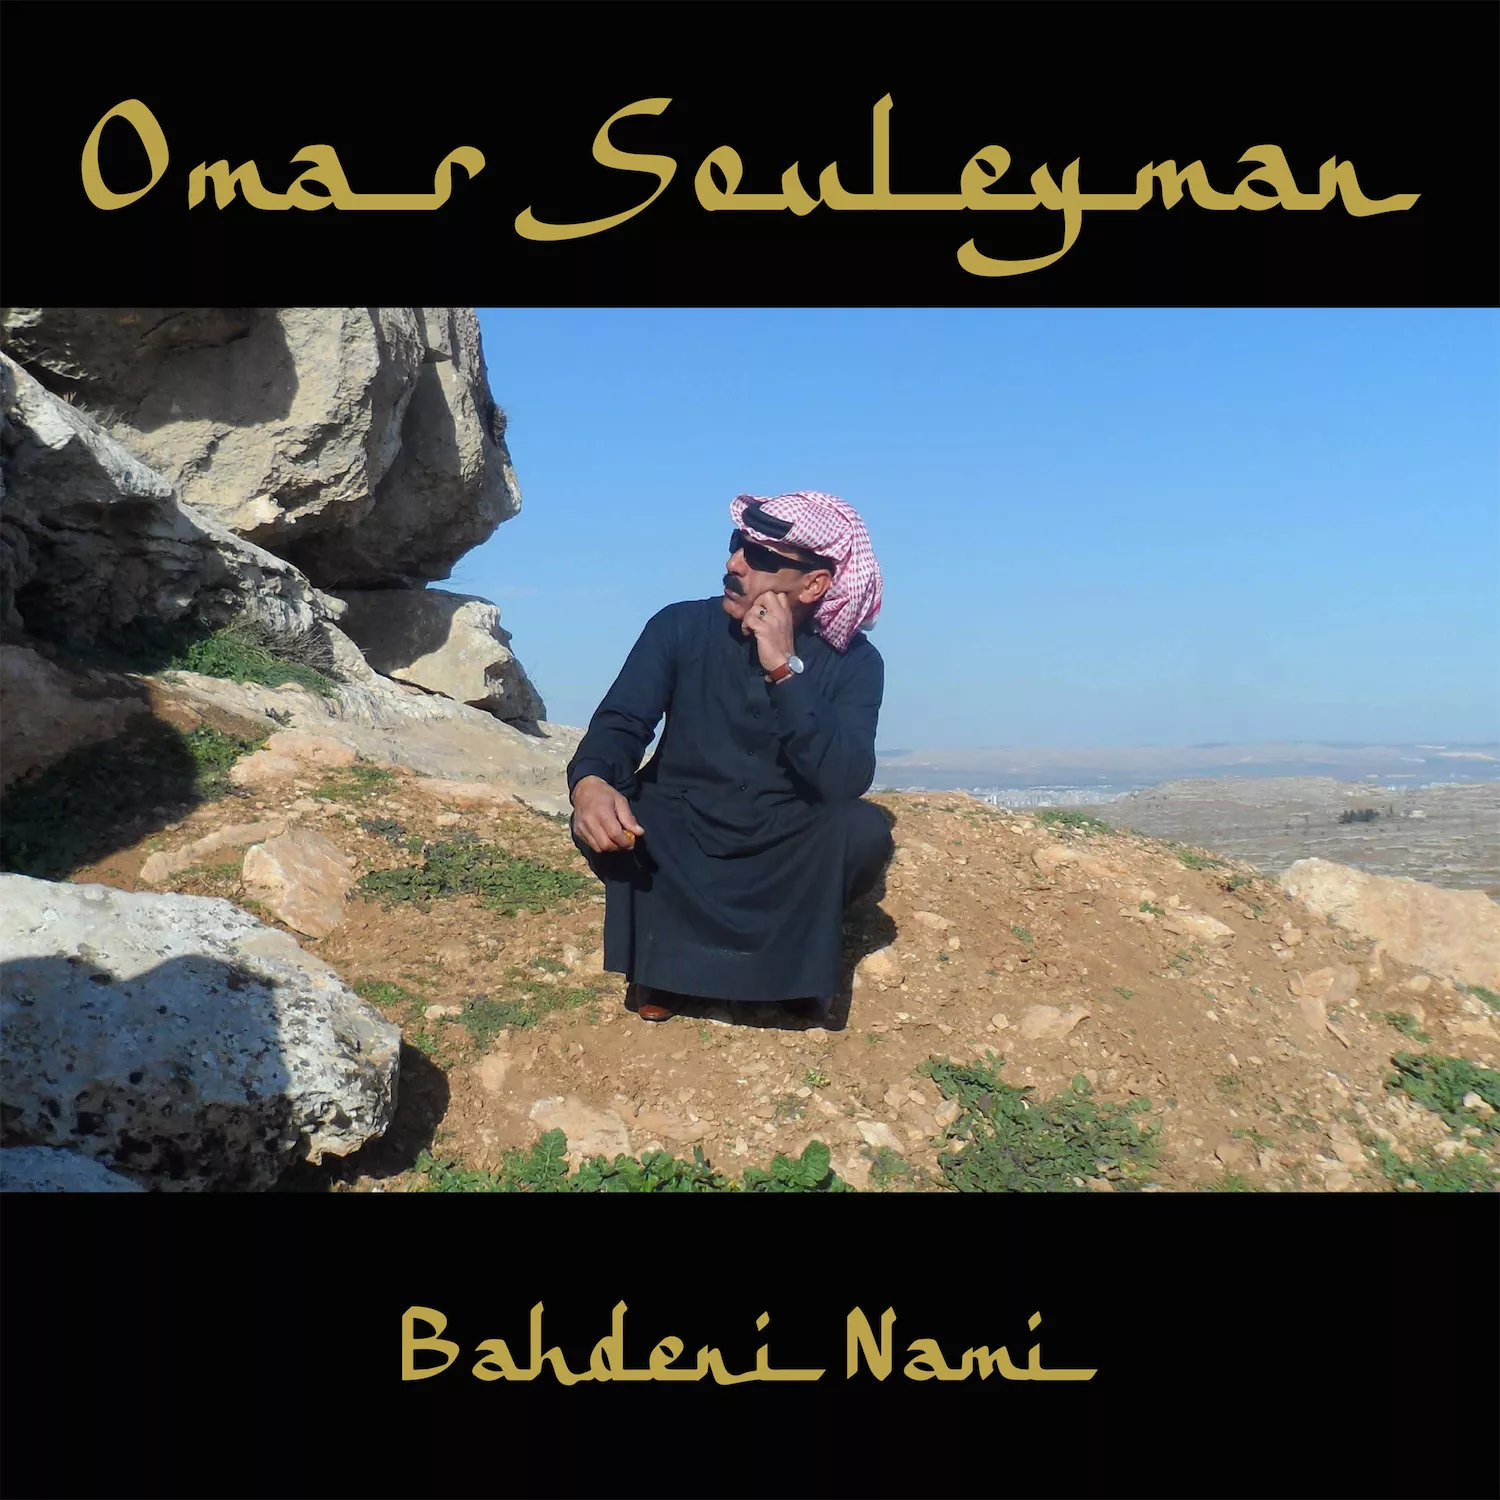 Bahdeni Nami - Omar Souleyman